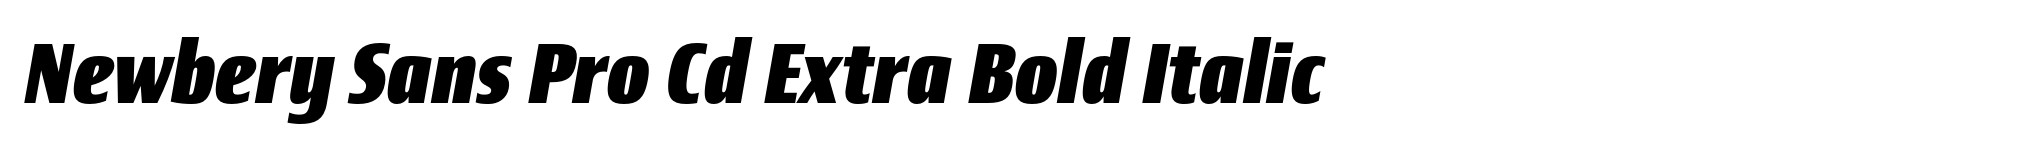 Newbery Sans Pro Cd Extra Bold Italic image